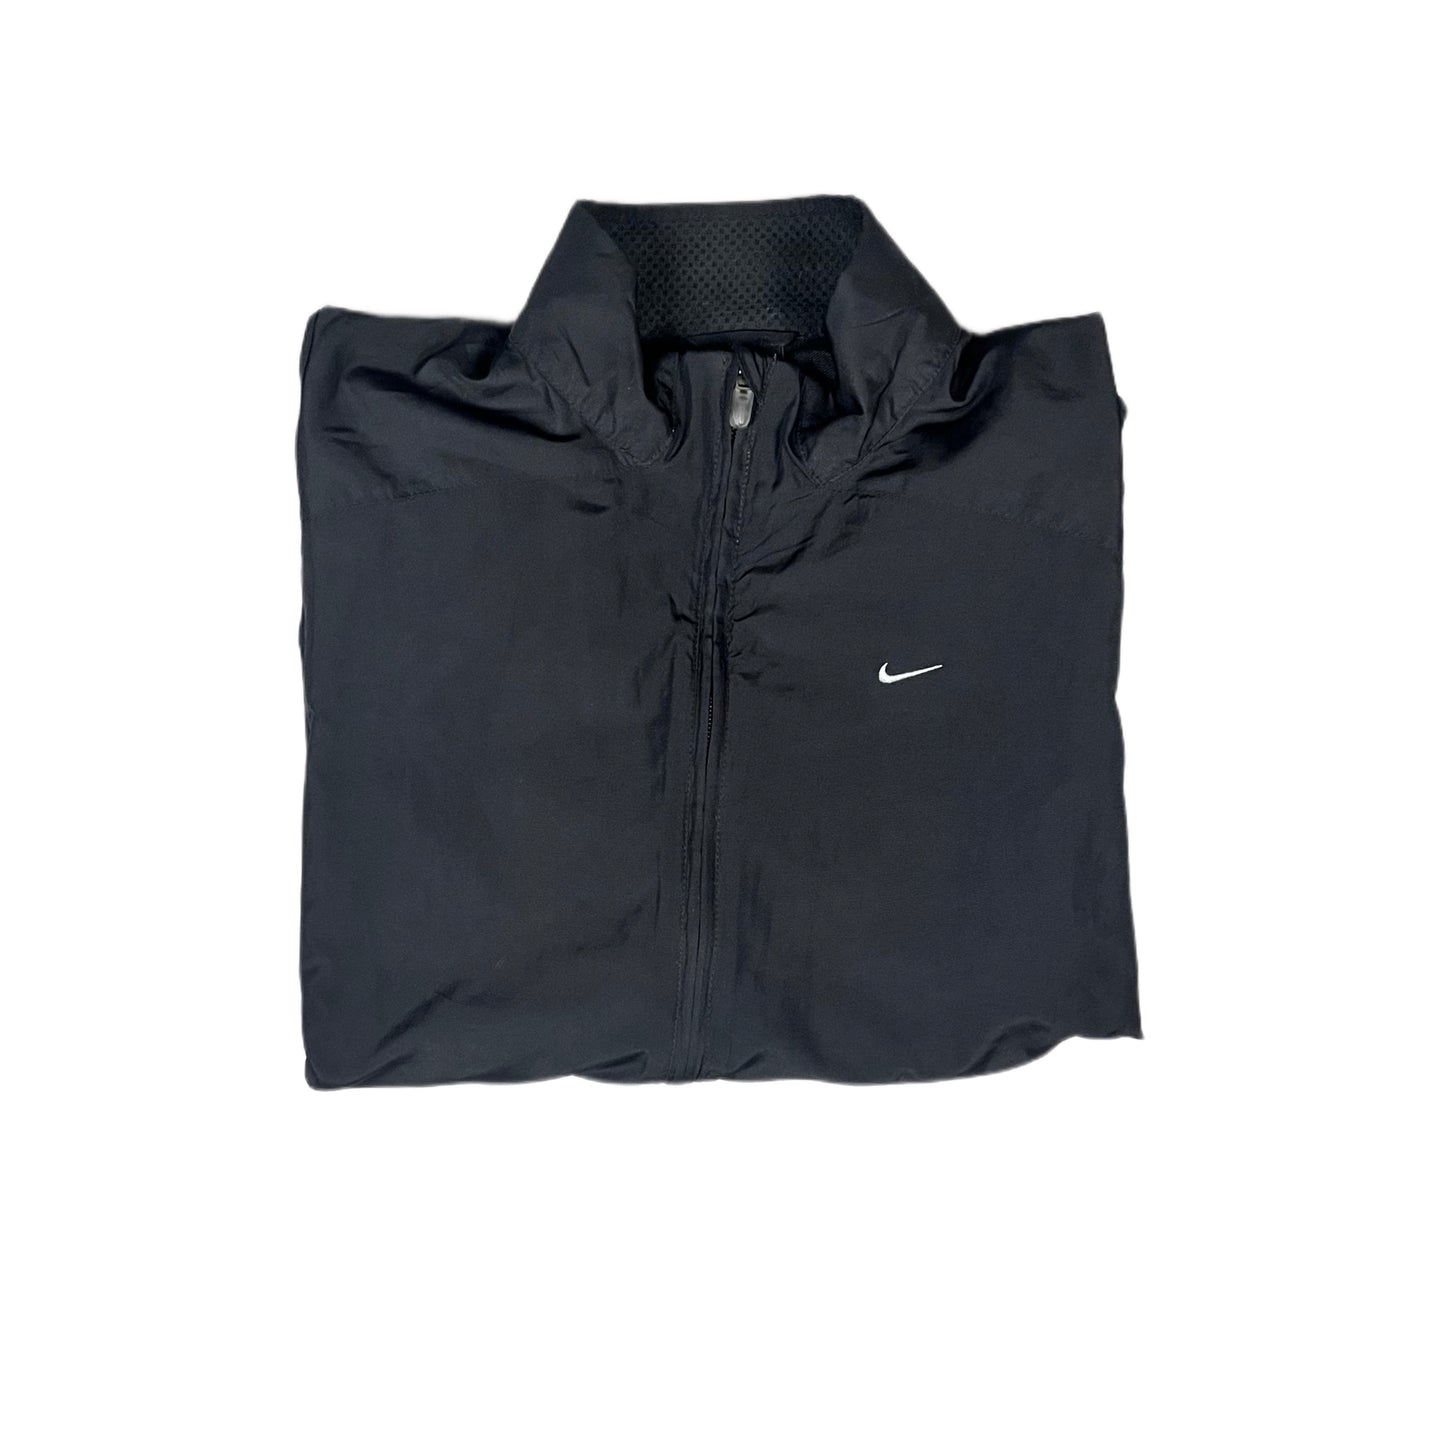 Nike Trackjacket black 2000s